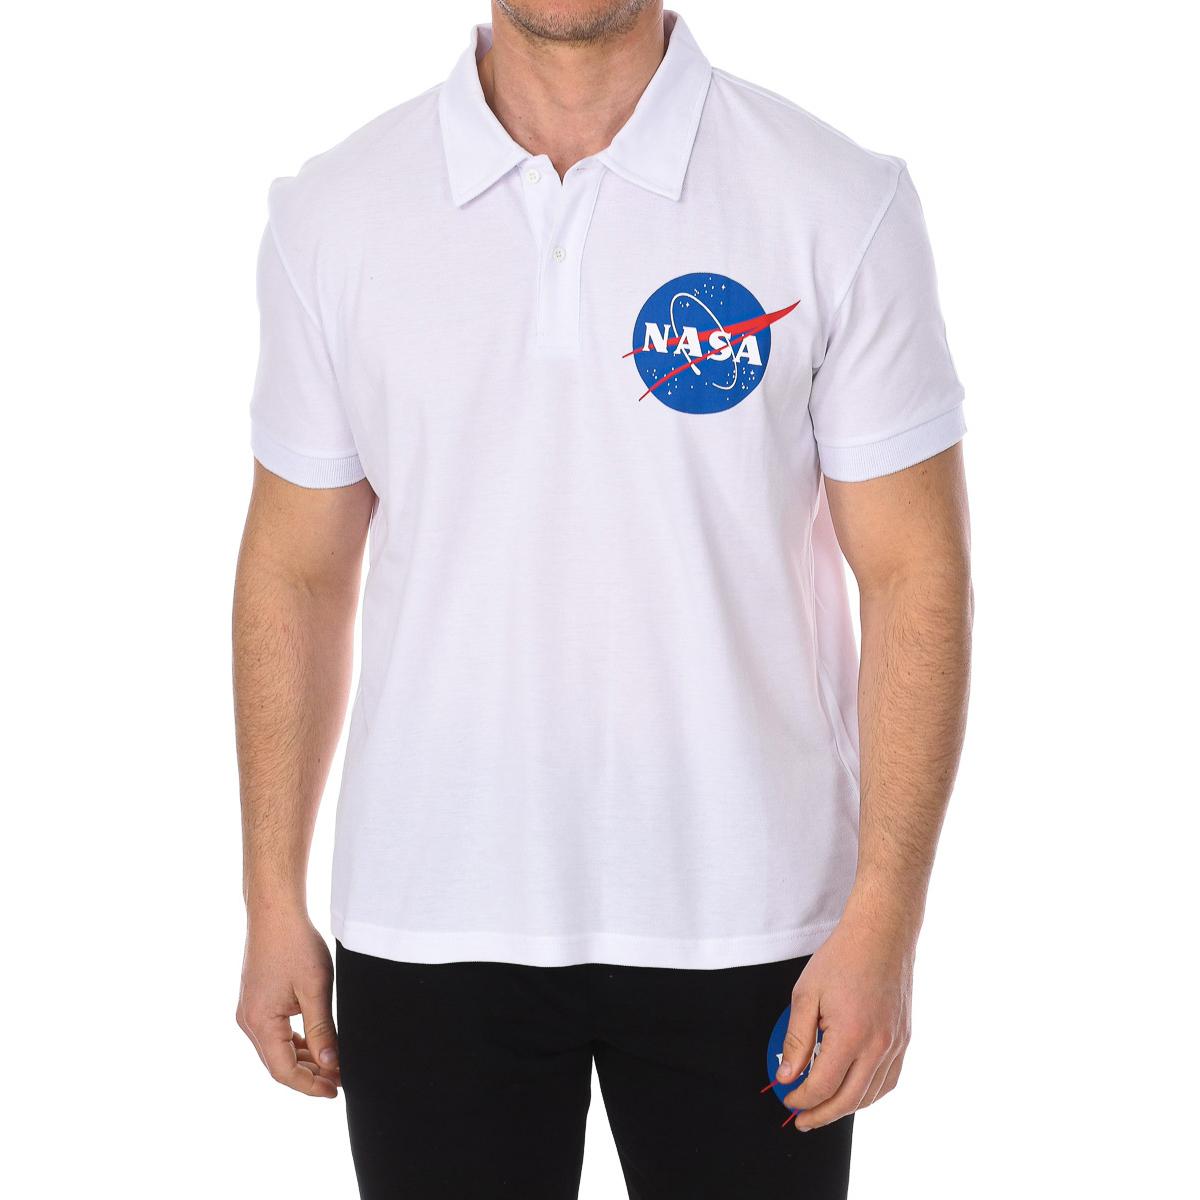 NASA 16PO herenpoloshirt met korte mouwen en reverskraag